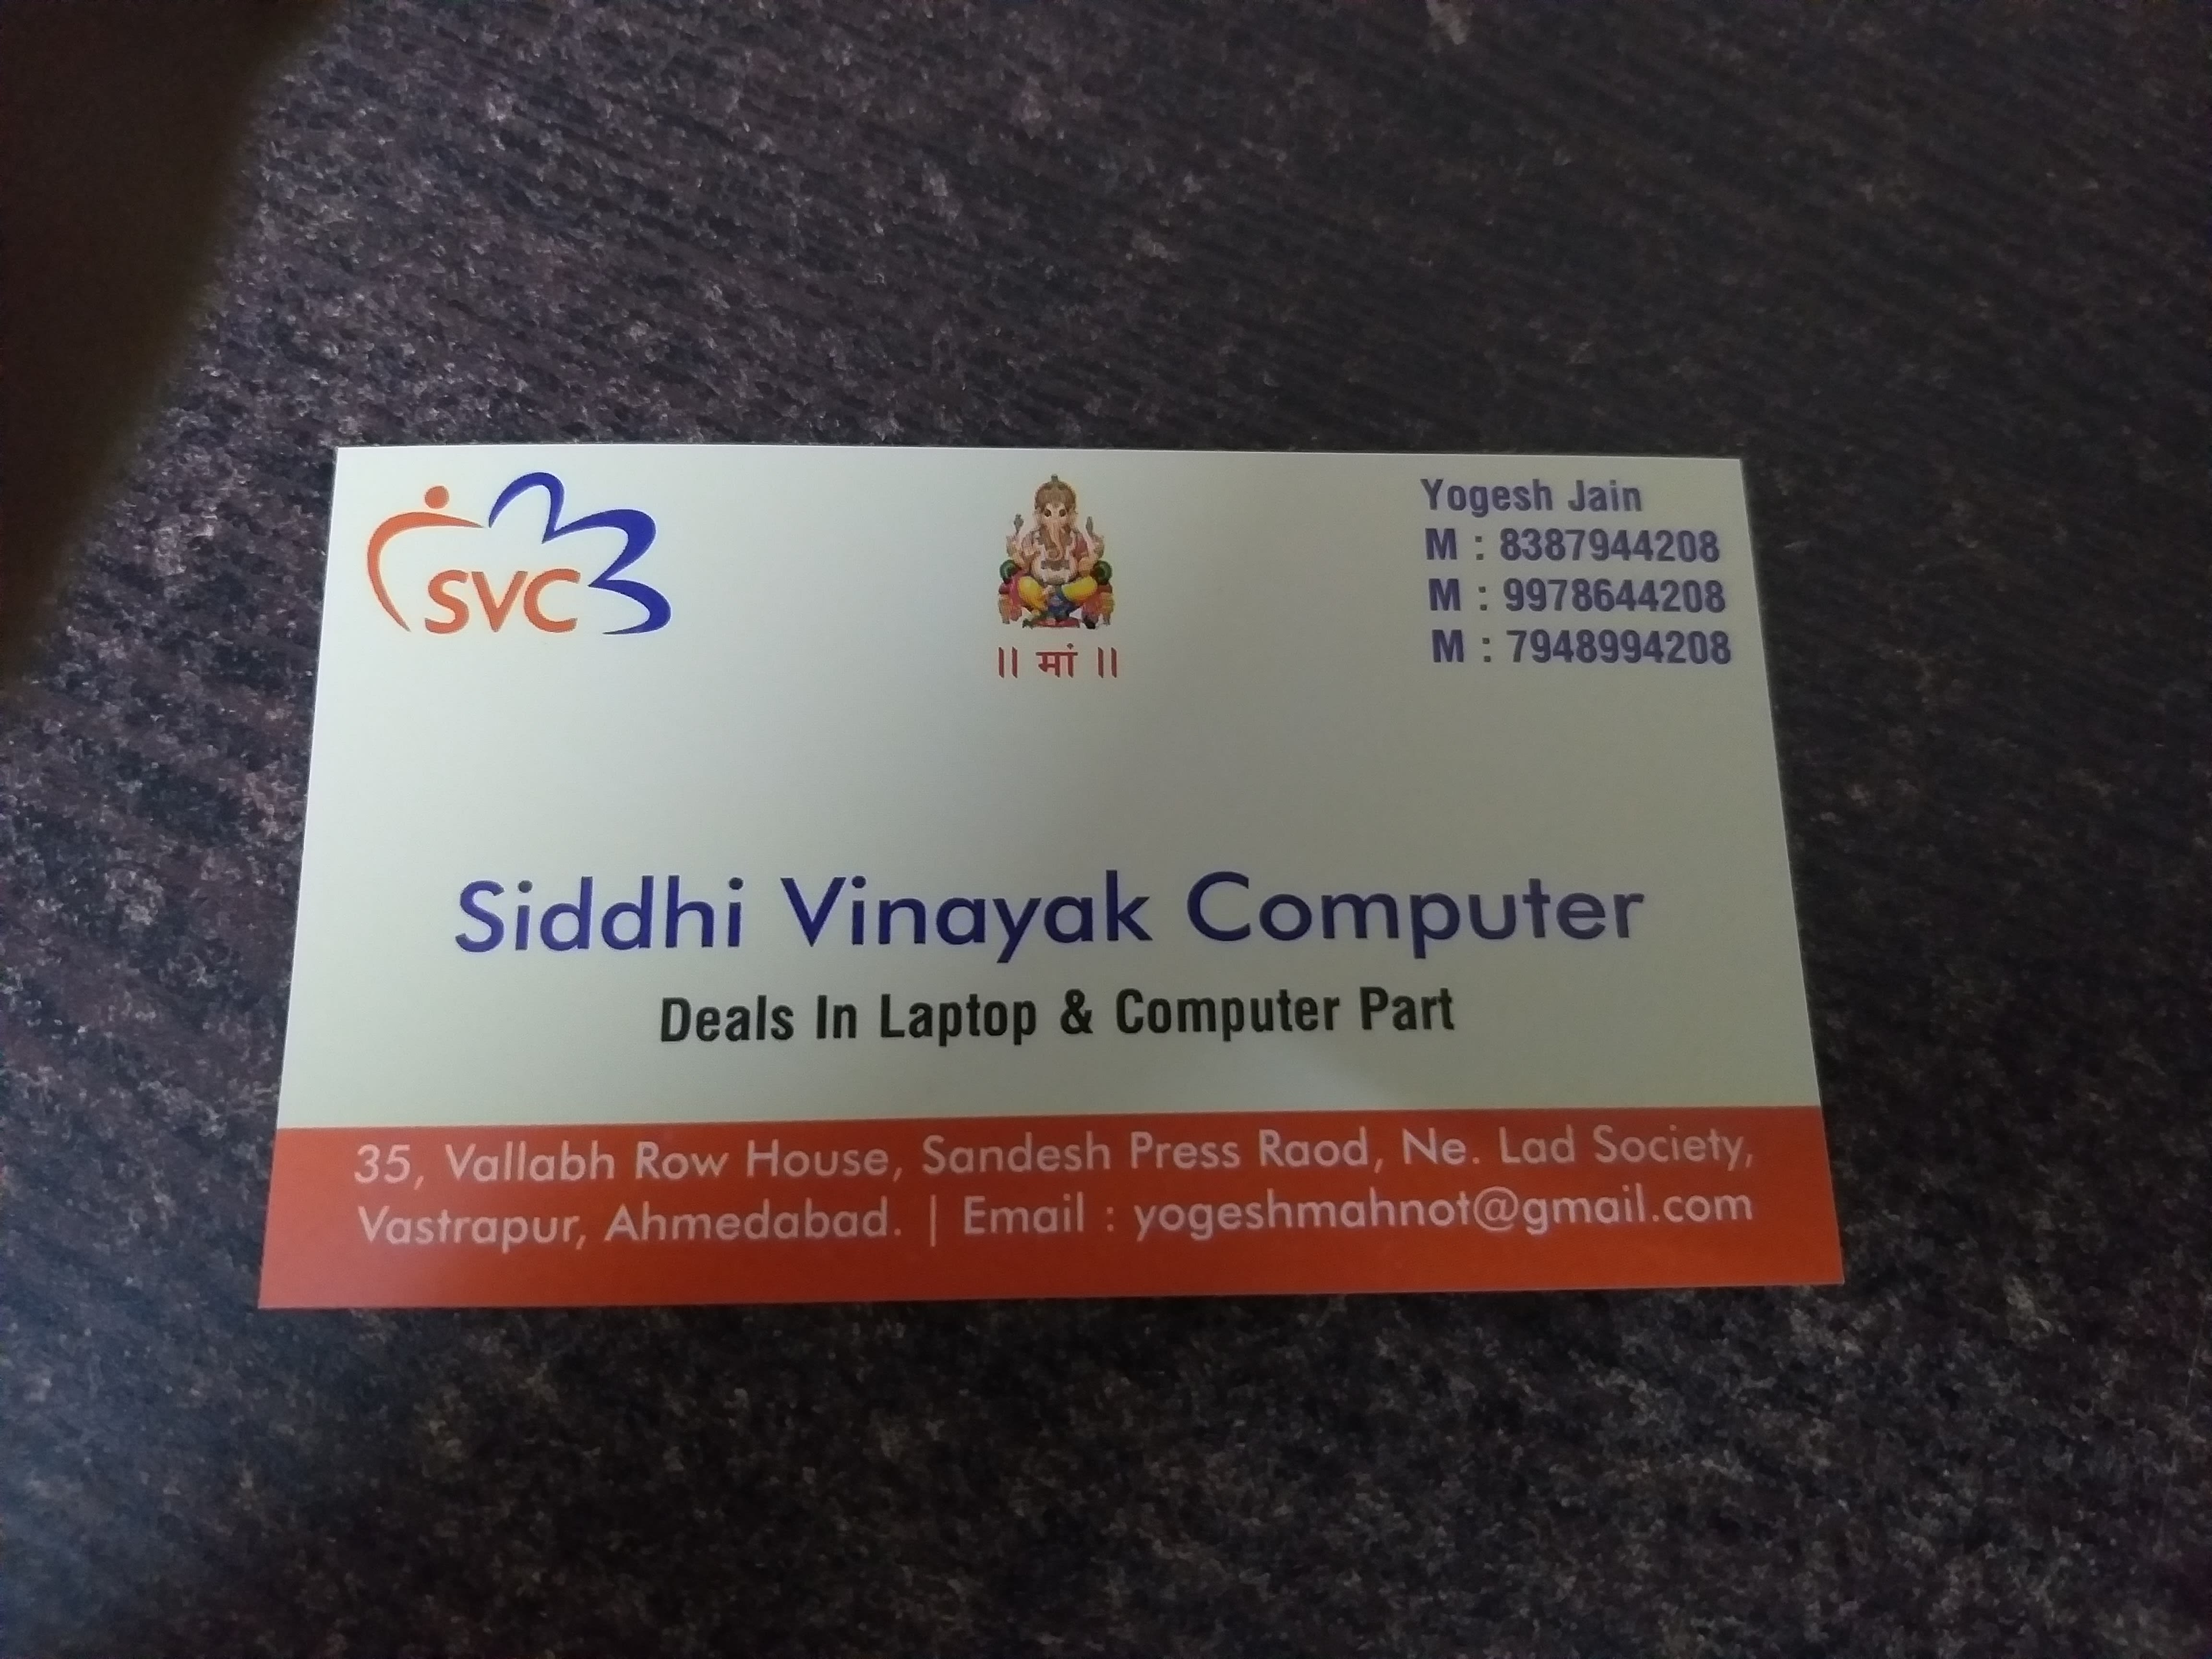 Siddhi Vinayak Computers